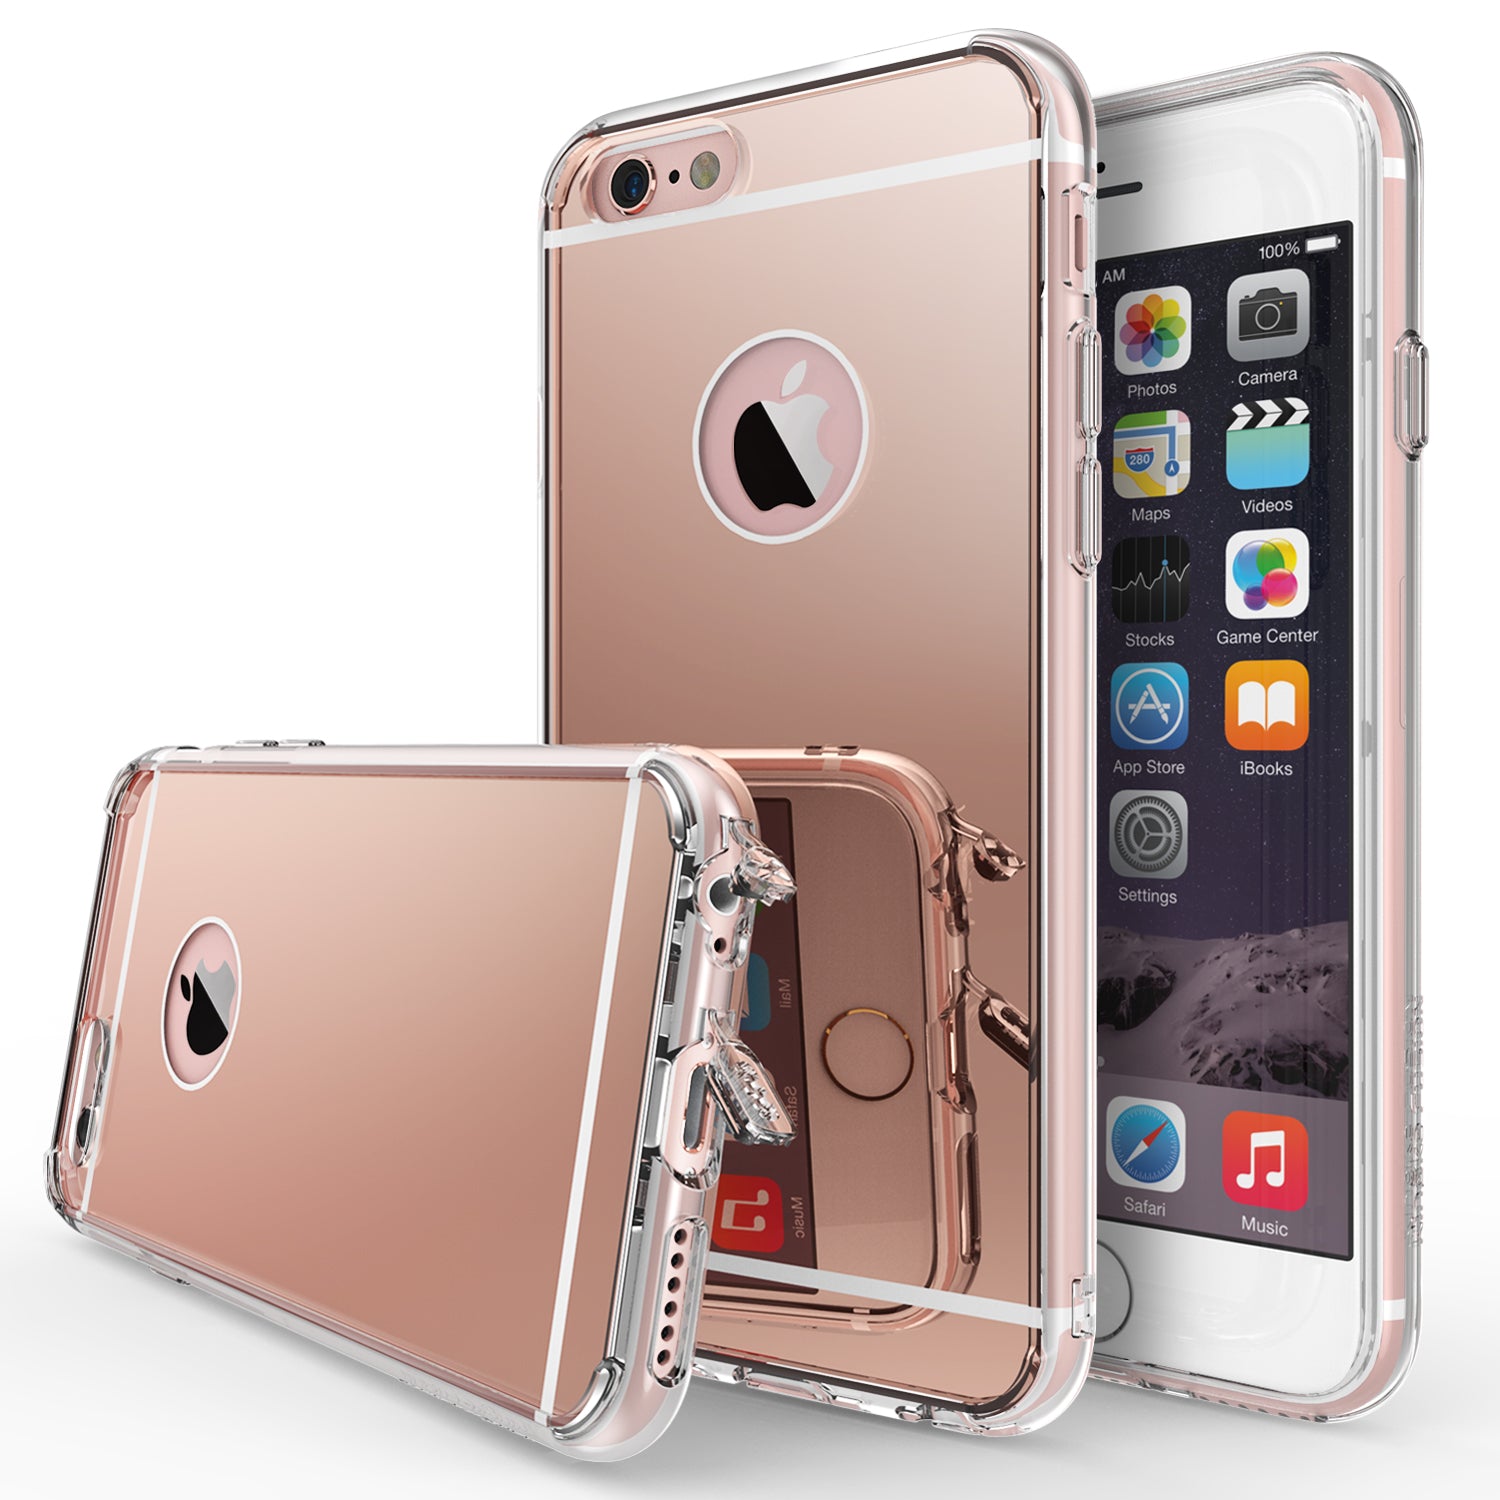 landheer Stevig dubbel Case for iPhone 6/6s | Ringke Mirror – Ringke Official Store